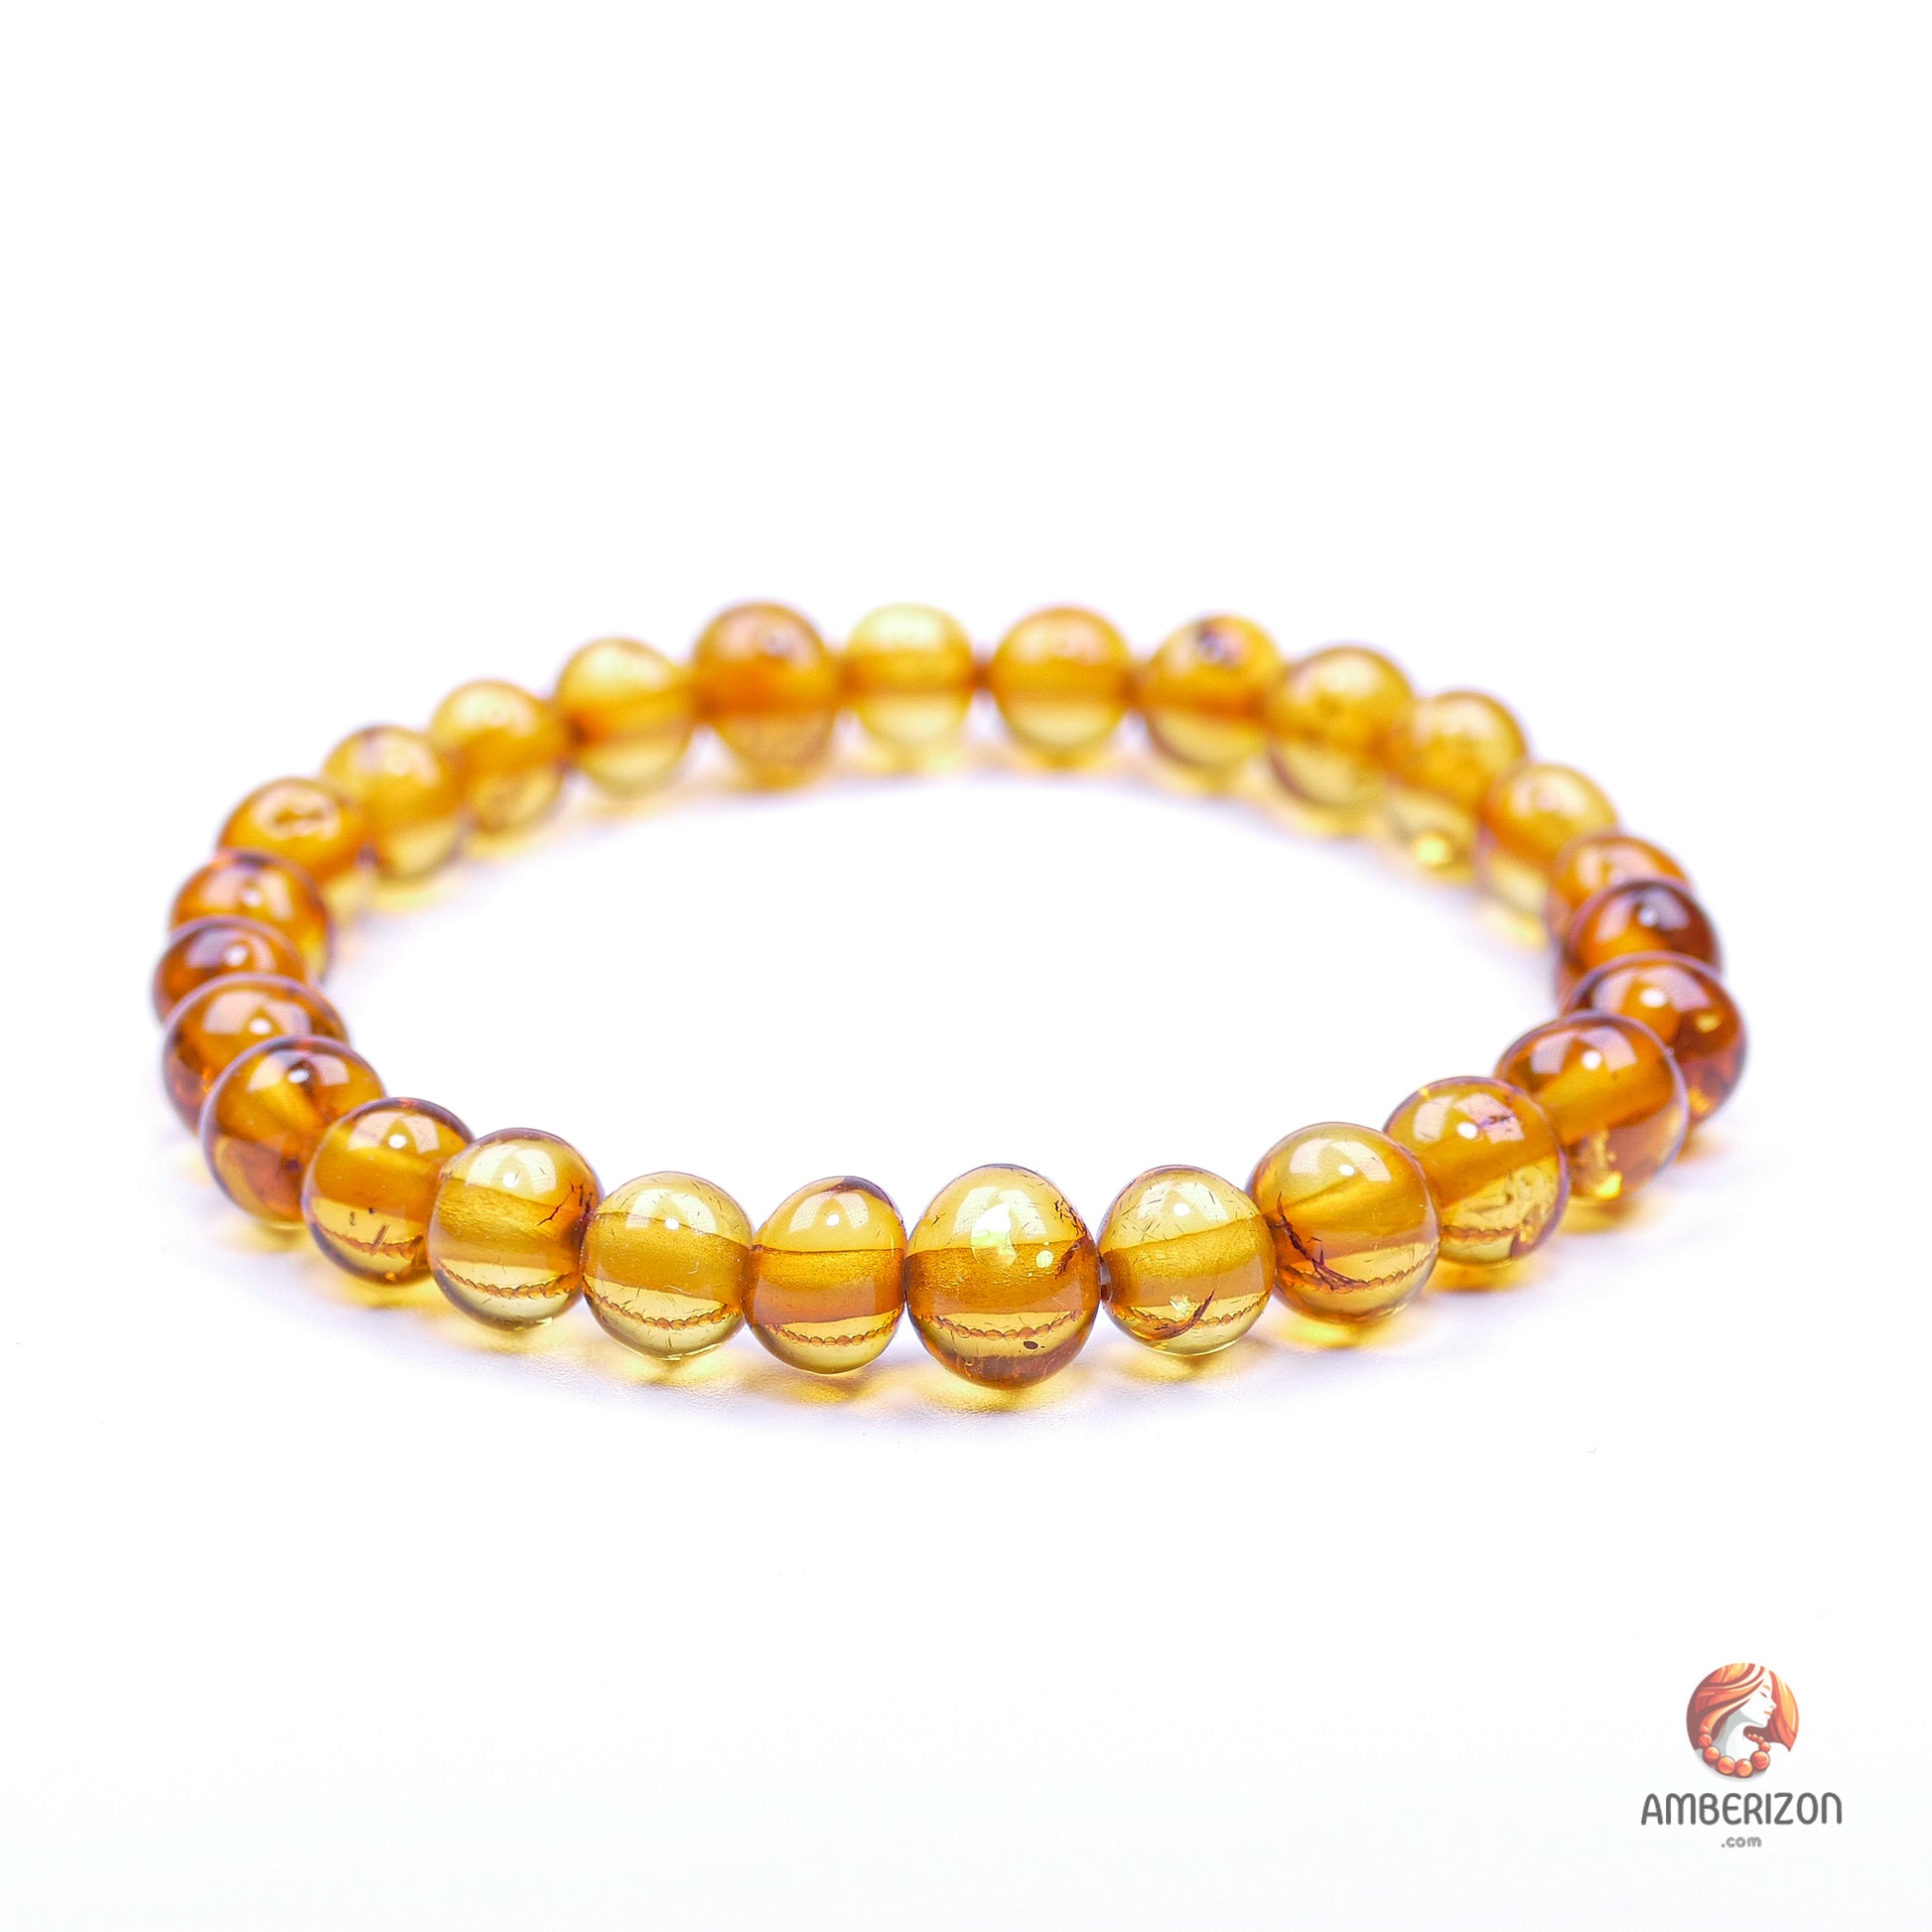 Clear polished amber bracelet - Premium translucent baroque beads